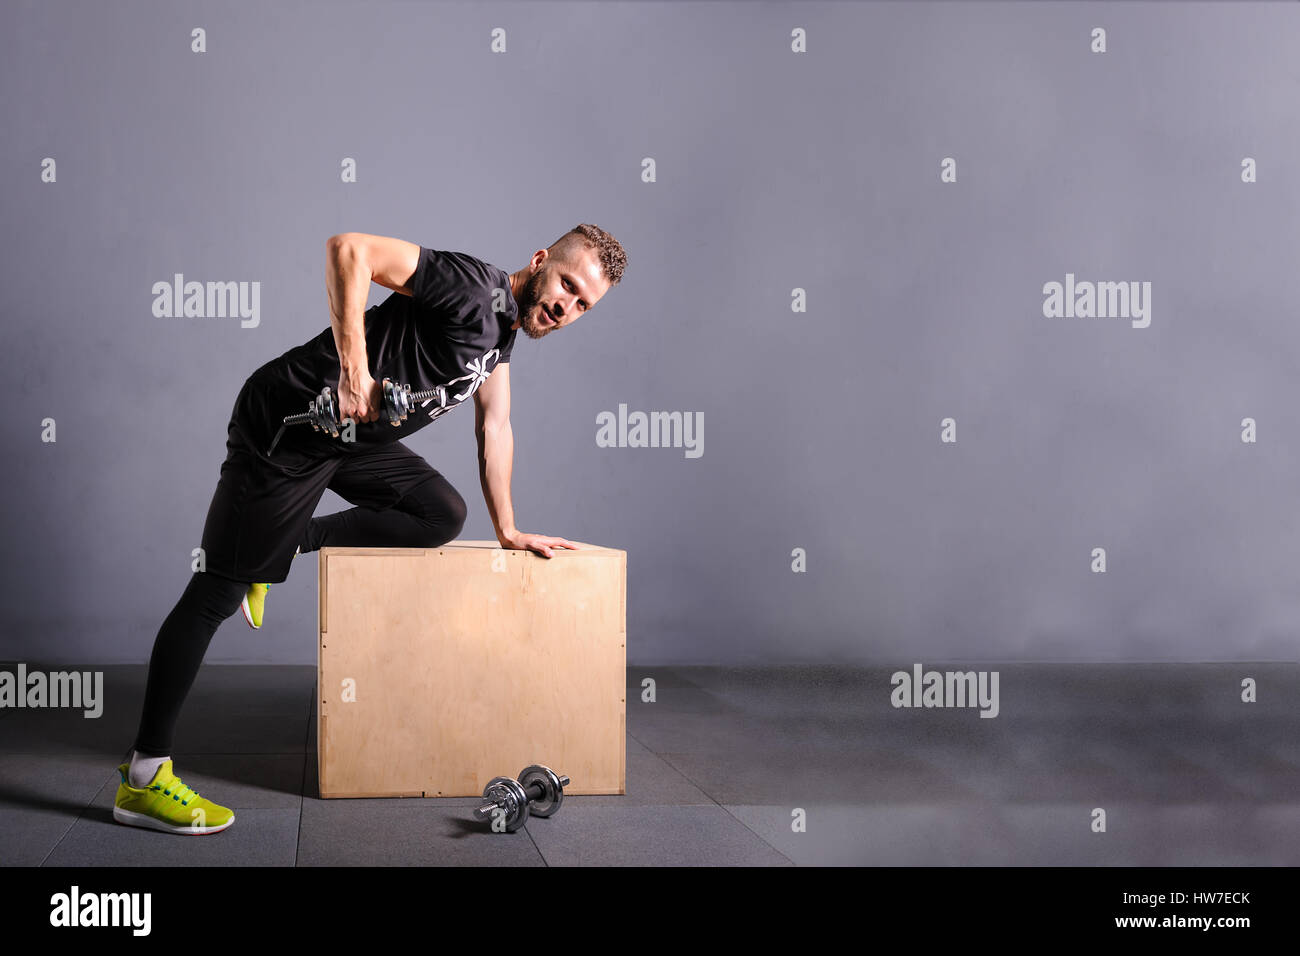 Man raising a dumbbell Copy space Stock Photo